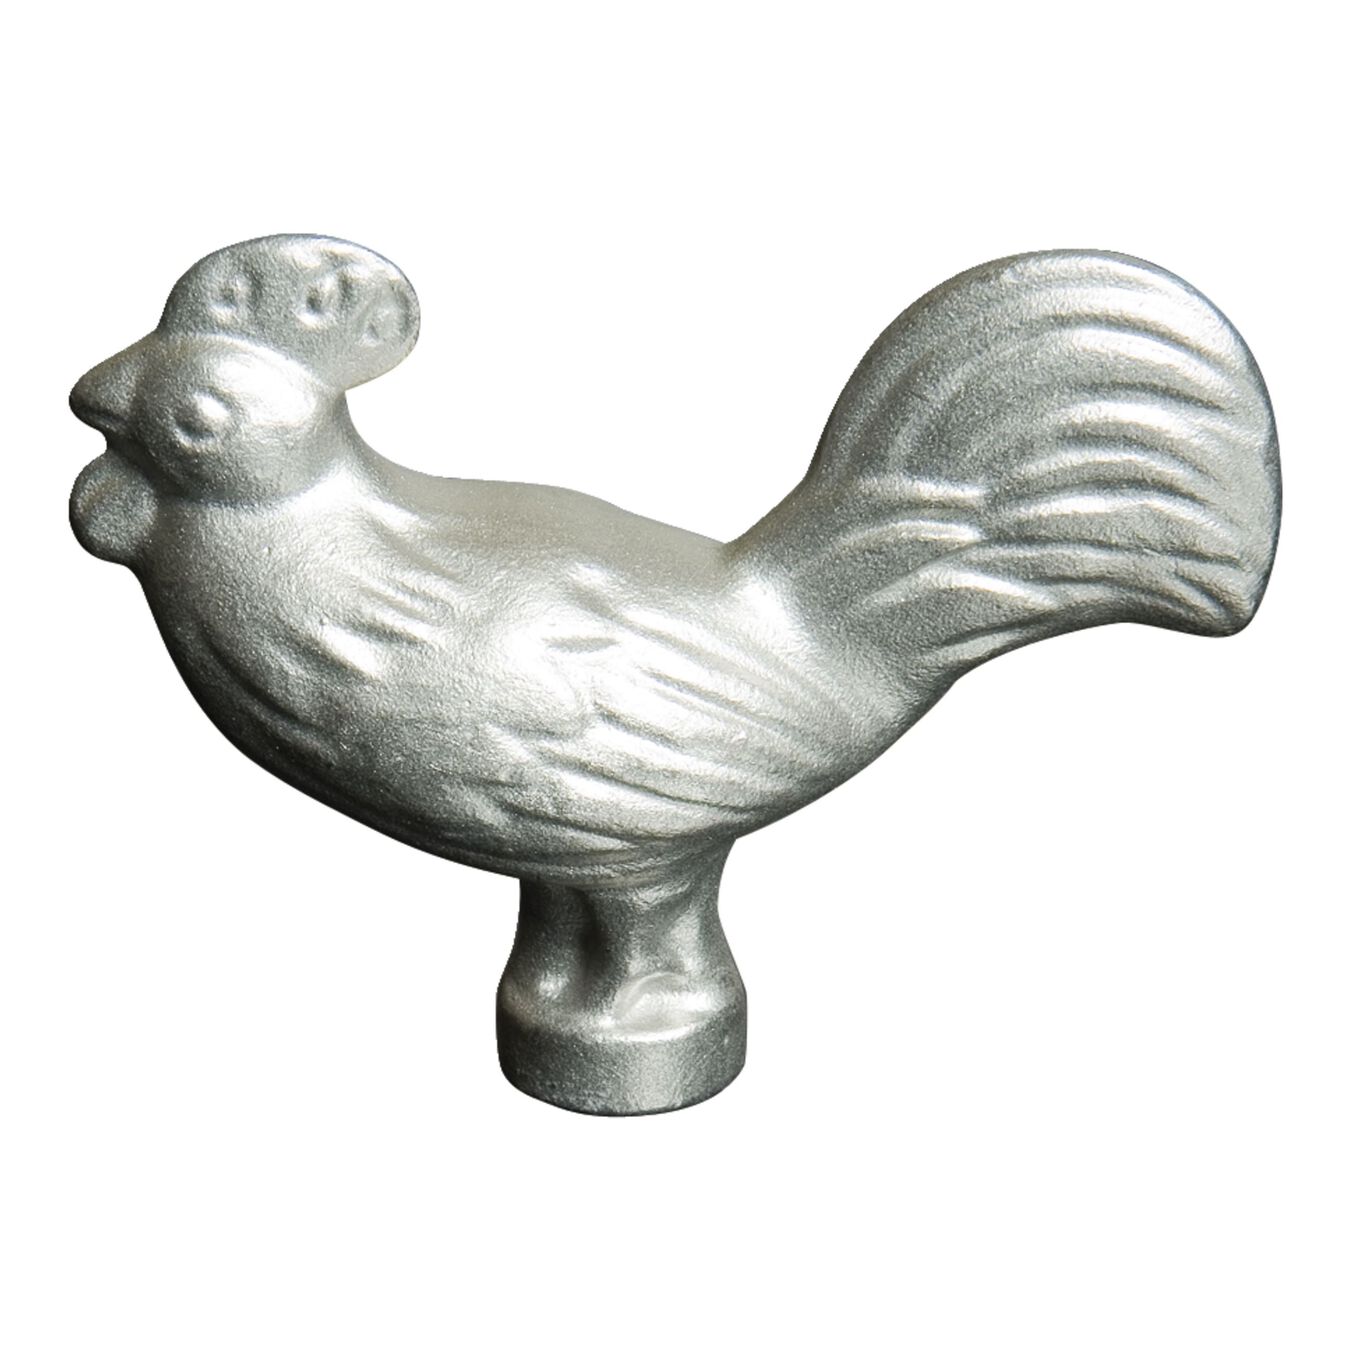 Pomello pollo - 7 cm, acciaio inox,,large 1